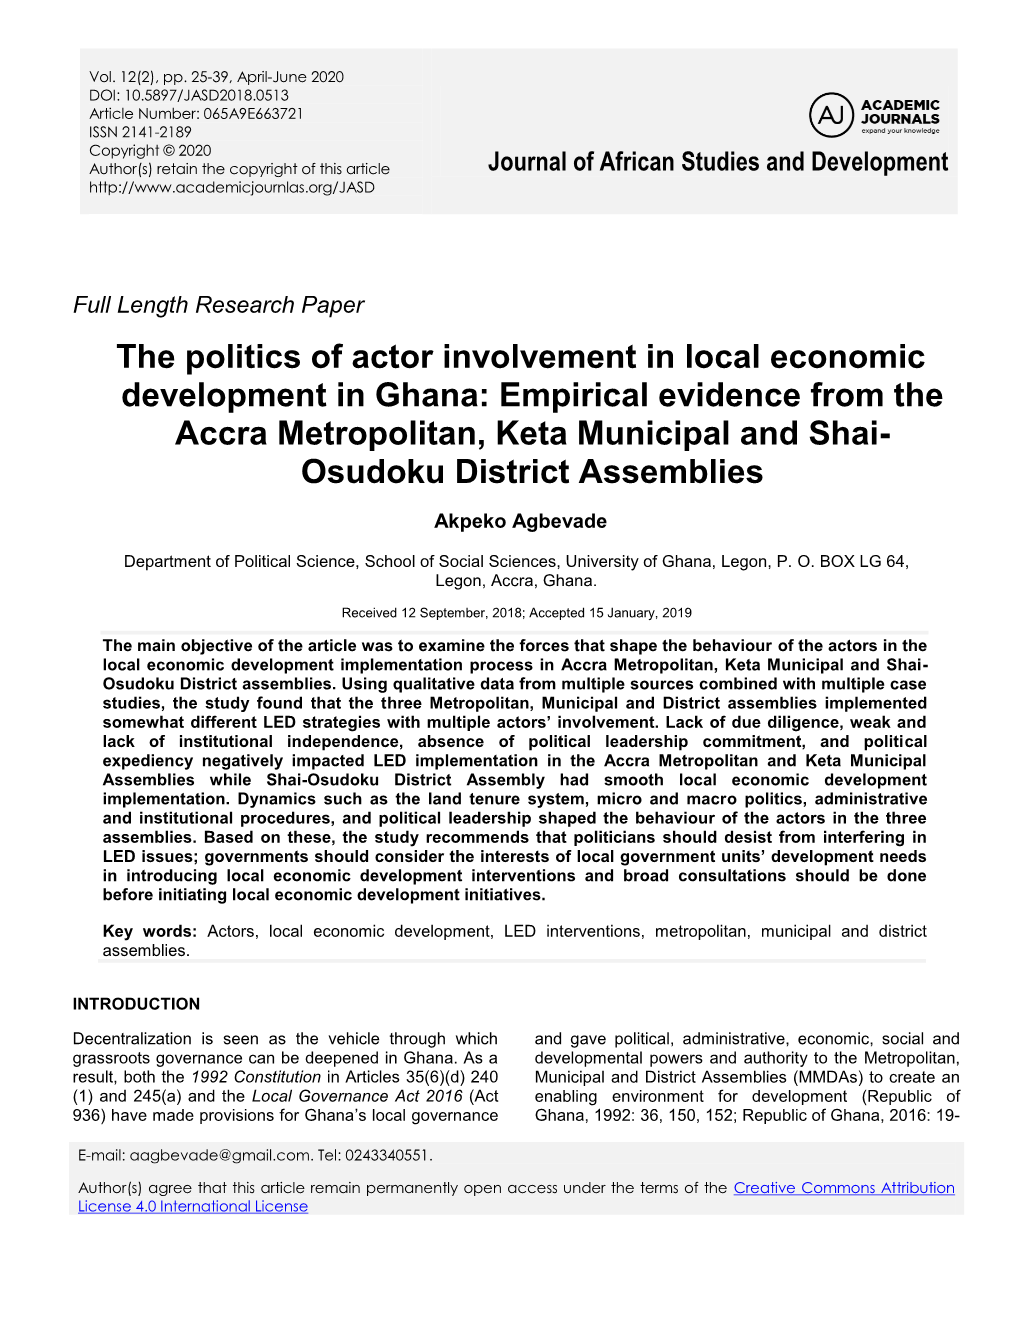 The Politics of Actor Involvement in Local